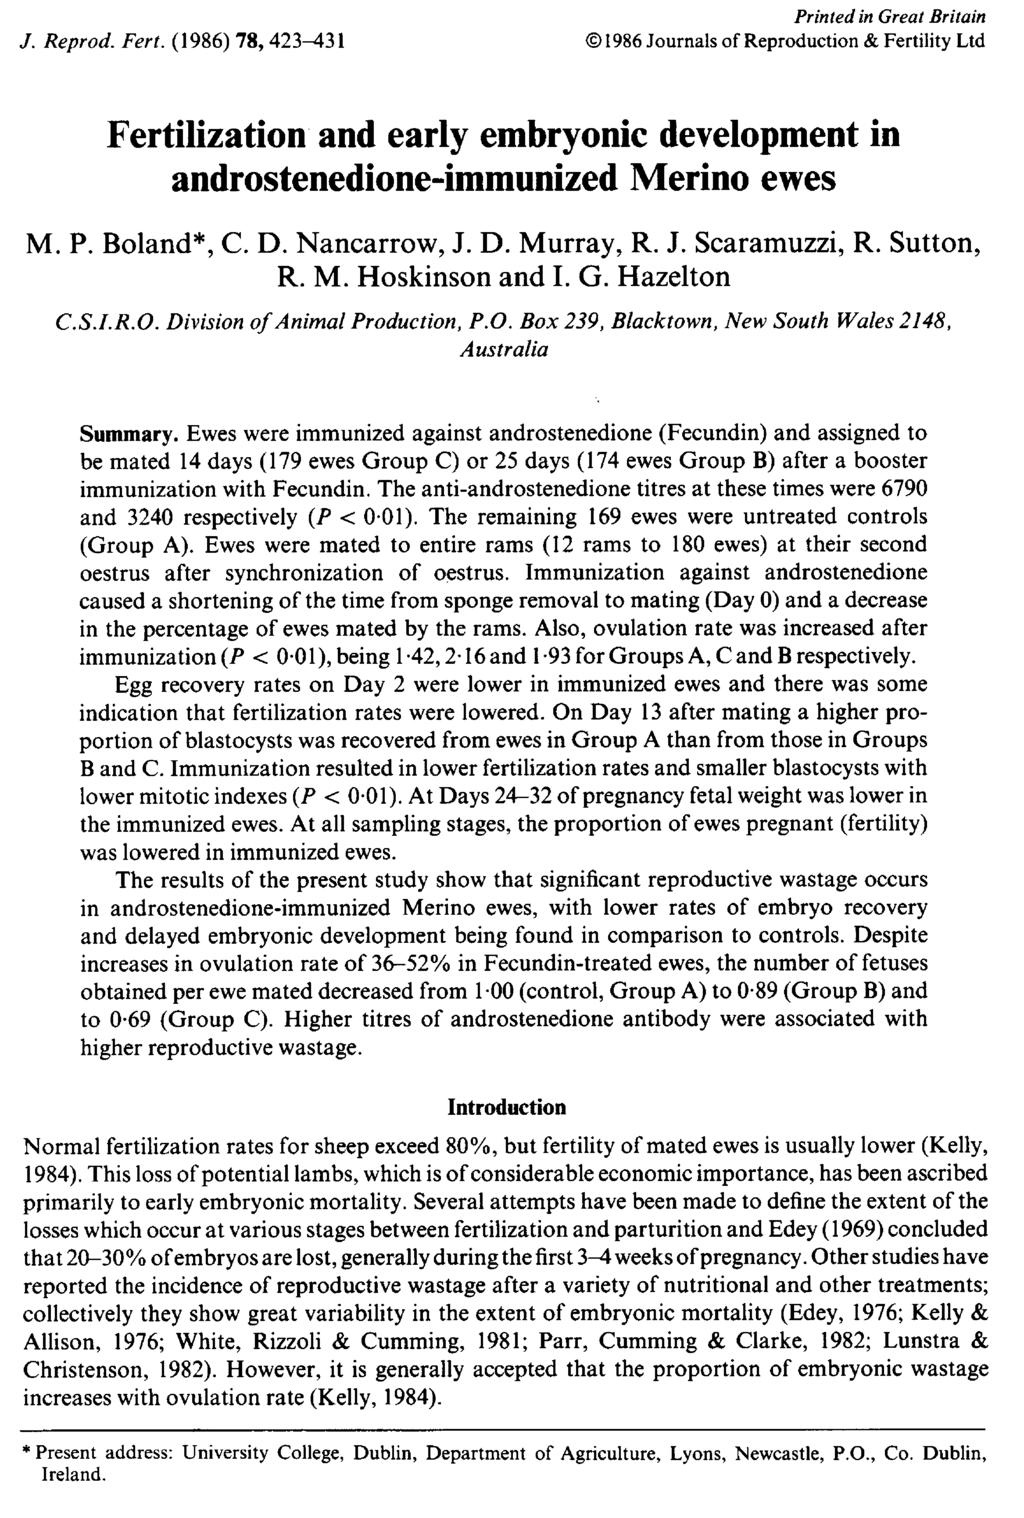 Fertilization and early embryonic development in androstenedione-immunized Merino ewes M. P. Boland, C. D. Nancarrow, J. D. Murray, R. J. Scaramuzzi, R. Sutton, R. M. Hoskinson and I. G. Hazelton C.S.I.R.O.